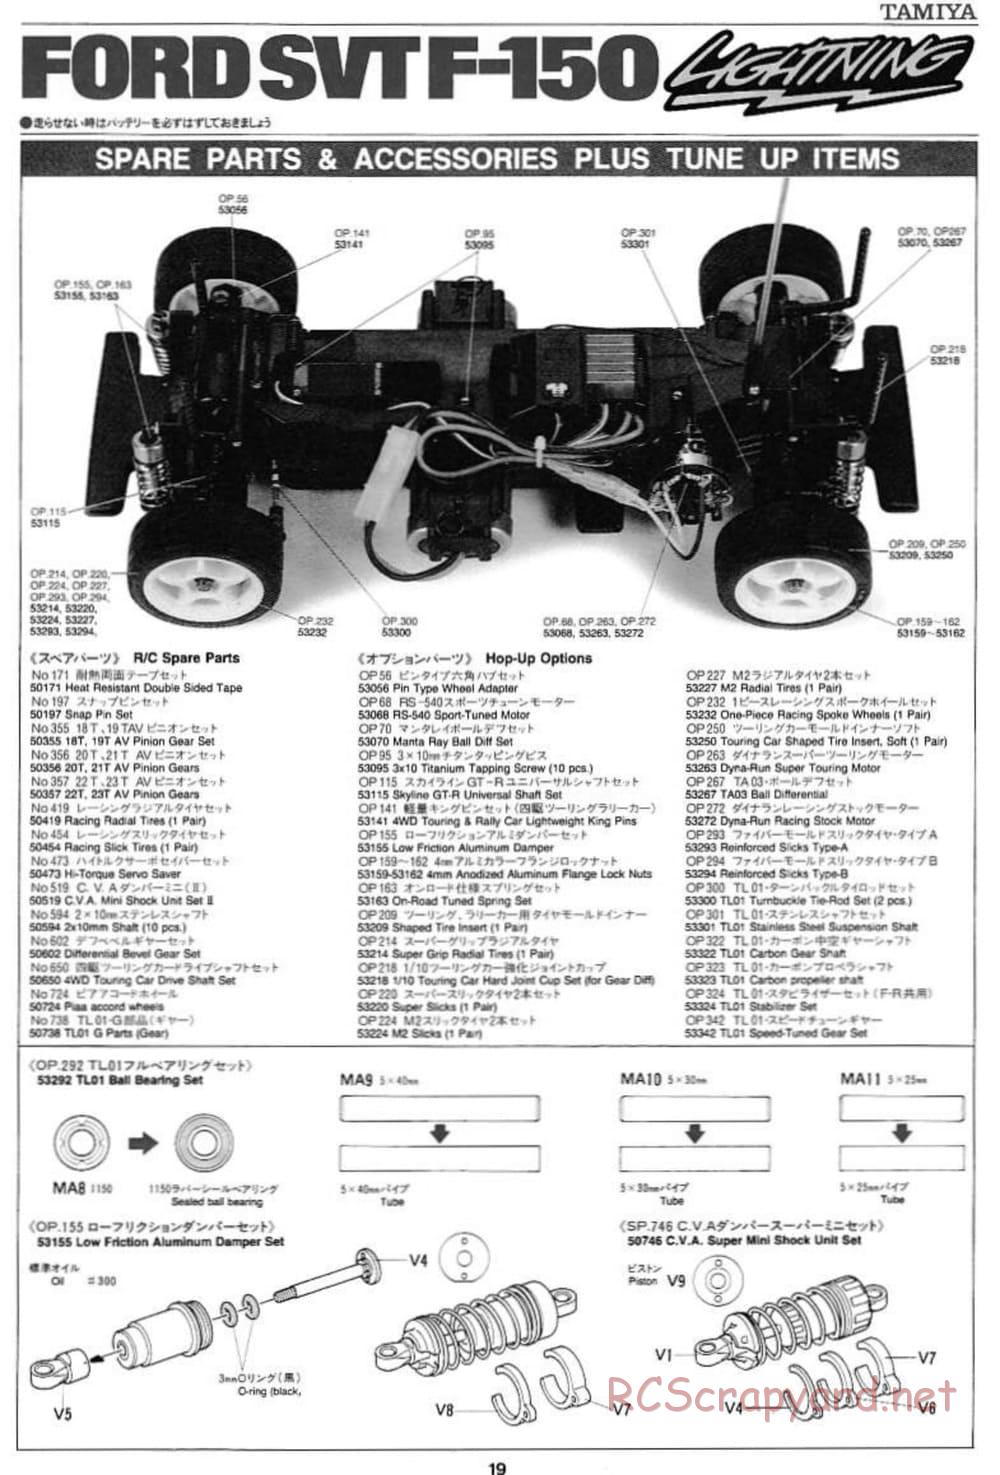 Tamiya - Ford SVT F-150 Lightning - TL-01 Chassis - Manual - Page 19